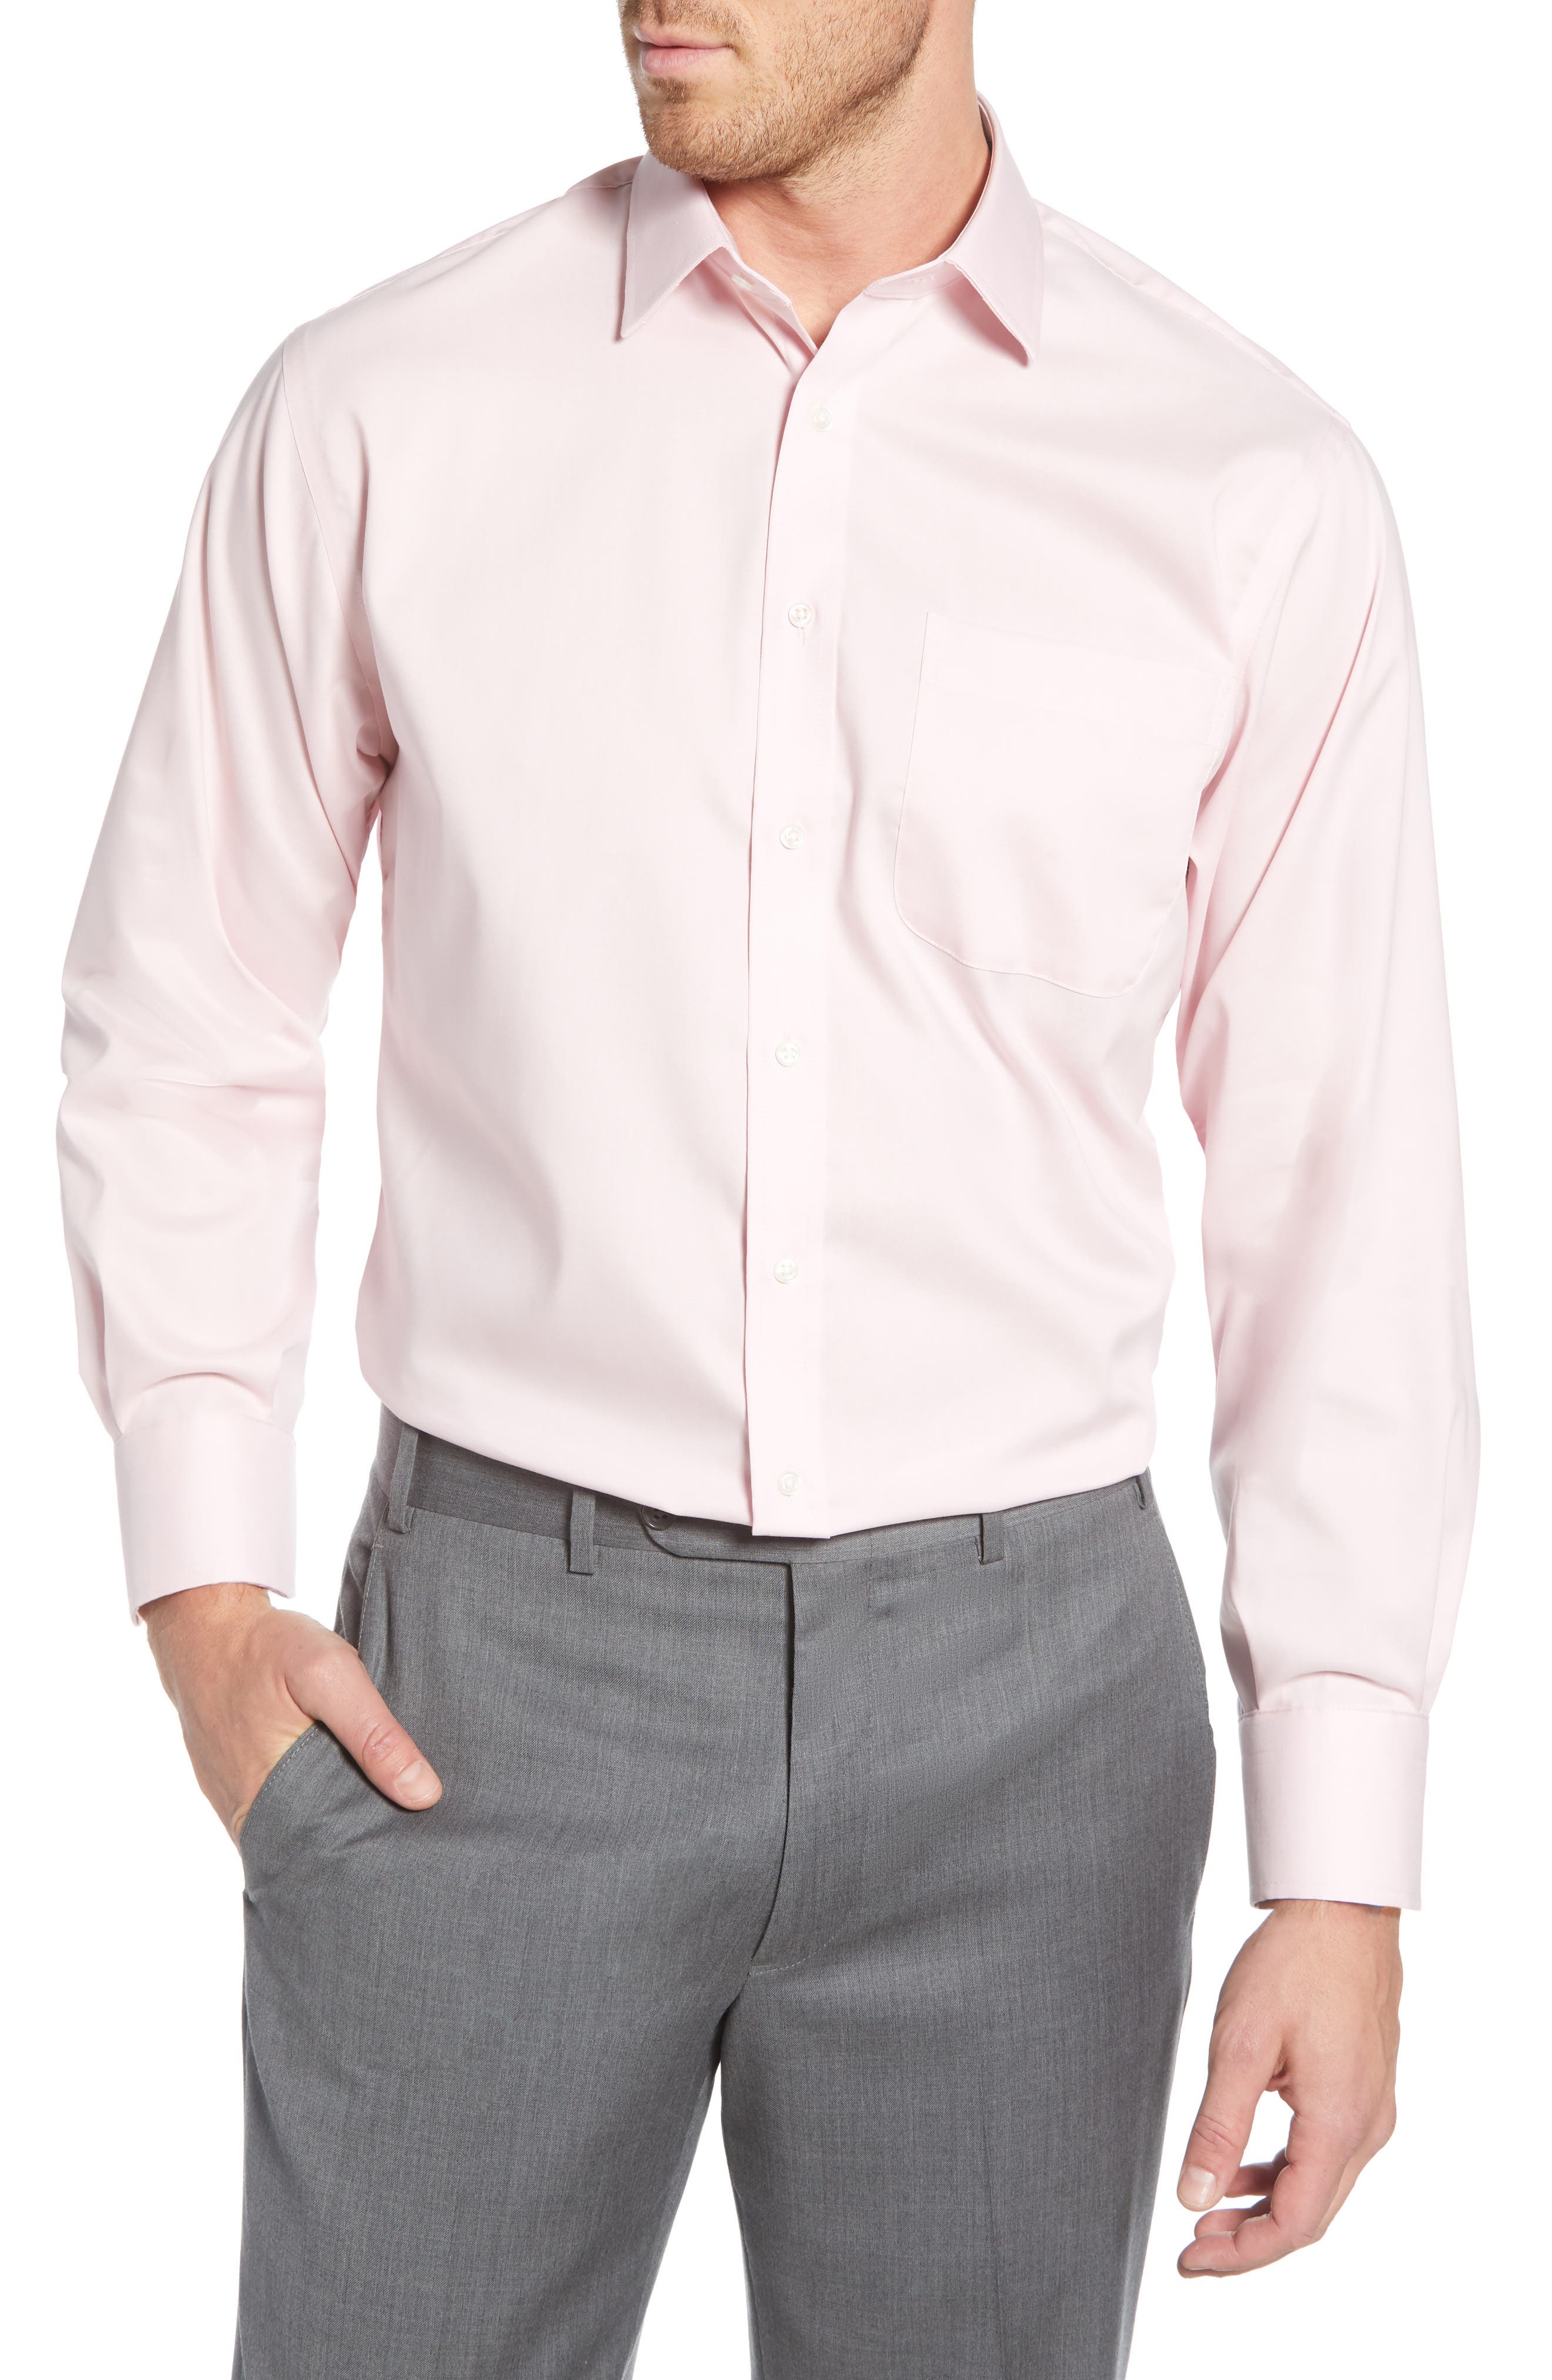 pink formal shirt mens